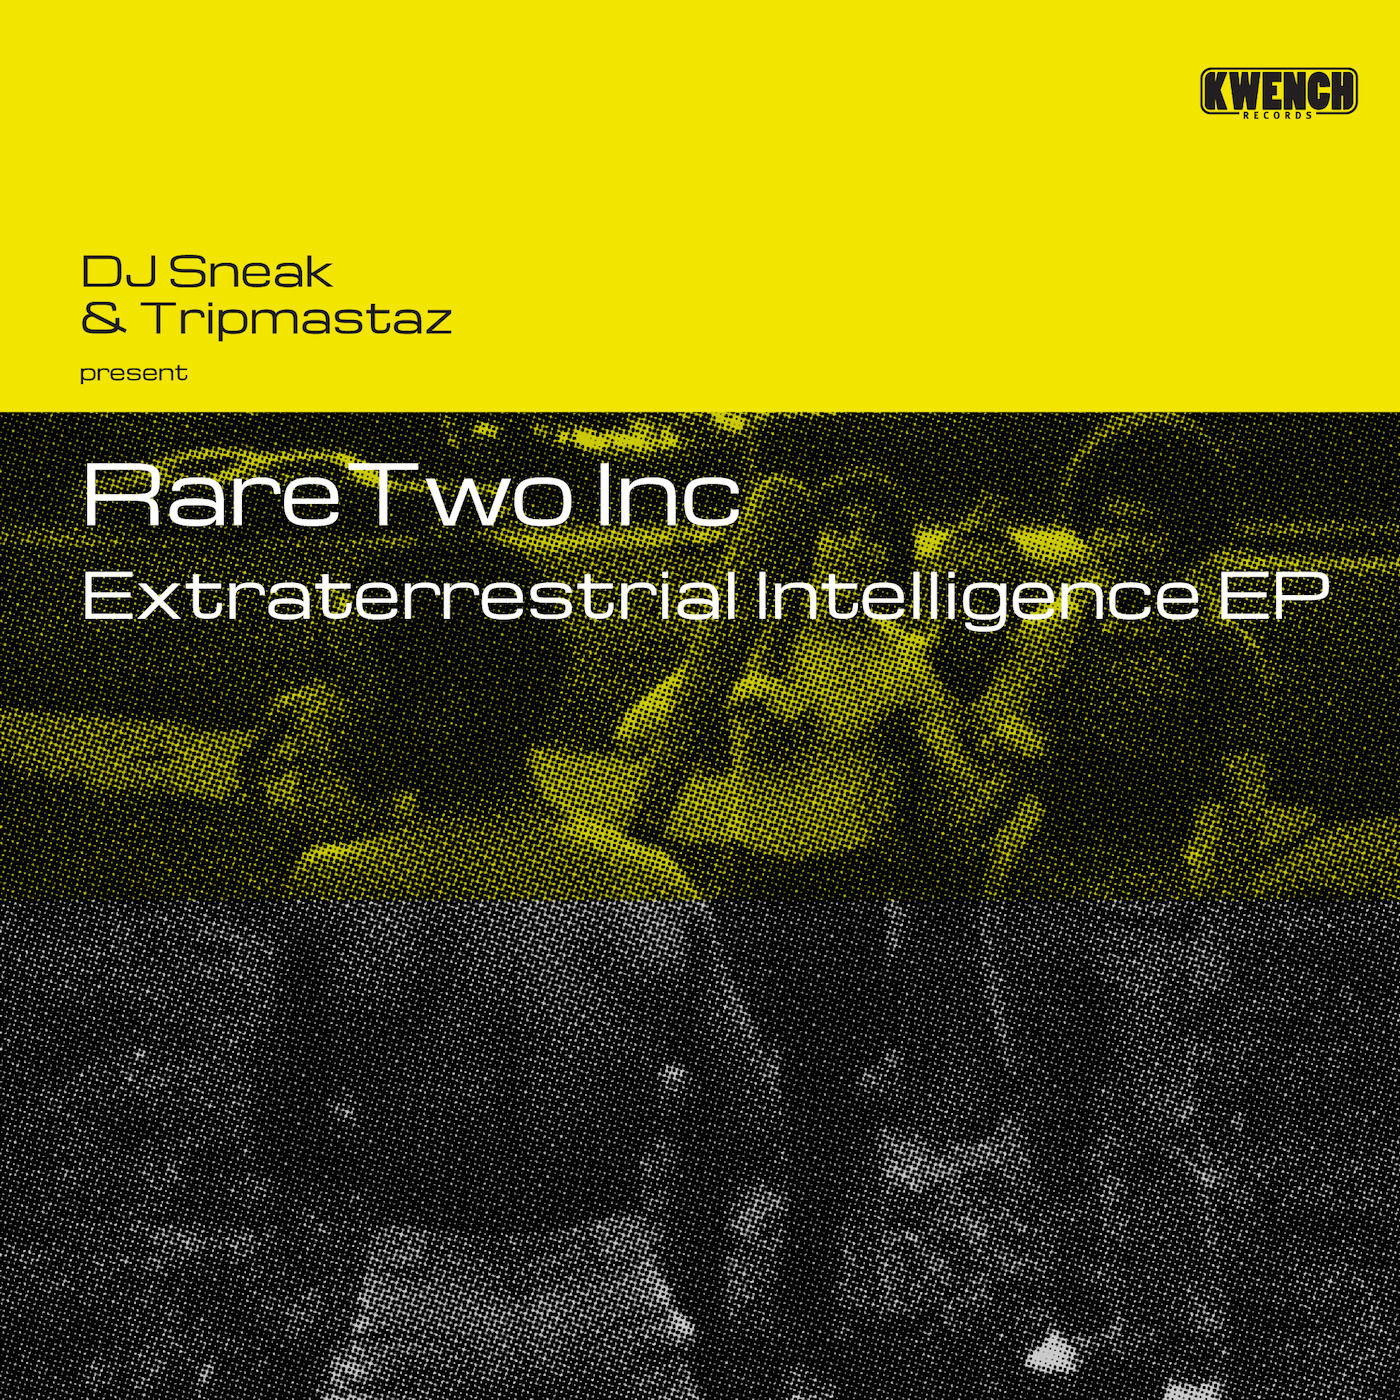 DJ Sneak & Tripmastaz present Rare Two Inc. - Extraterrestrial Intelligence EP / Kwench Records